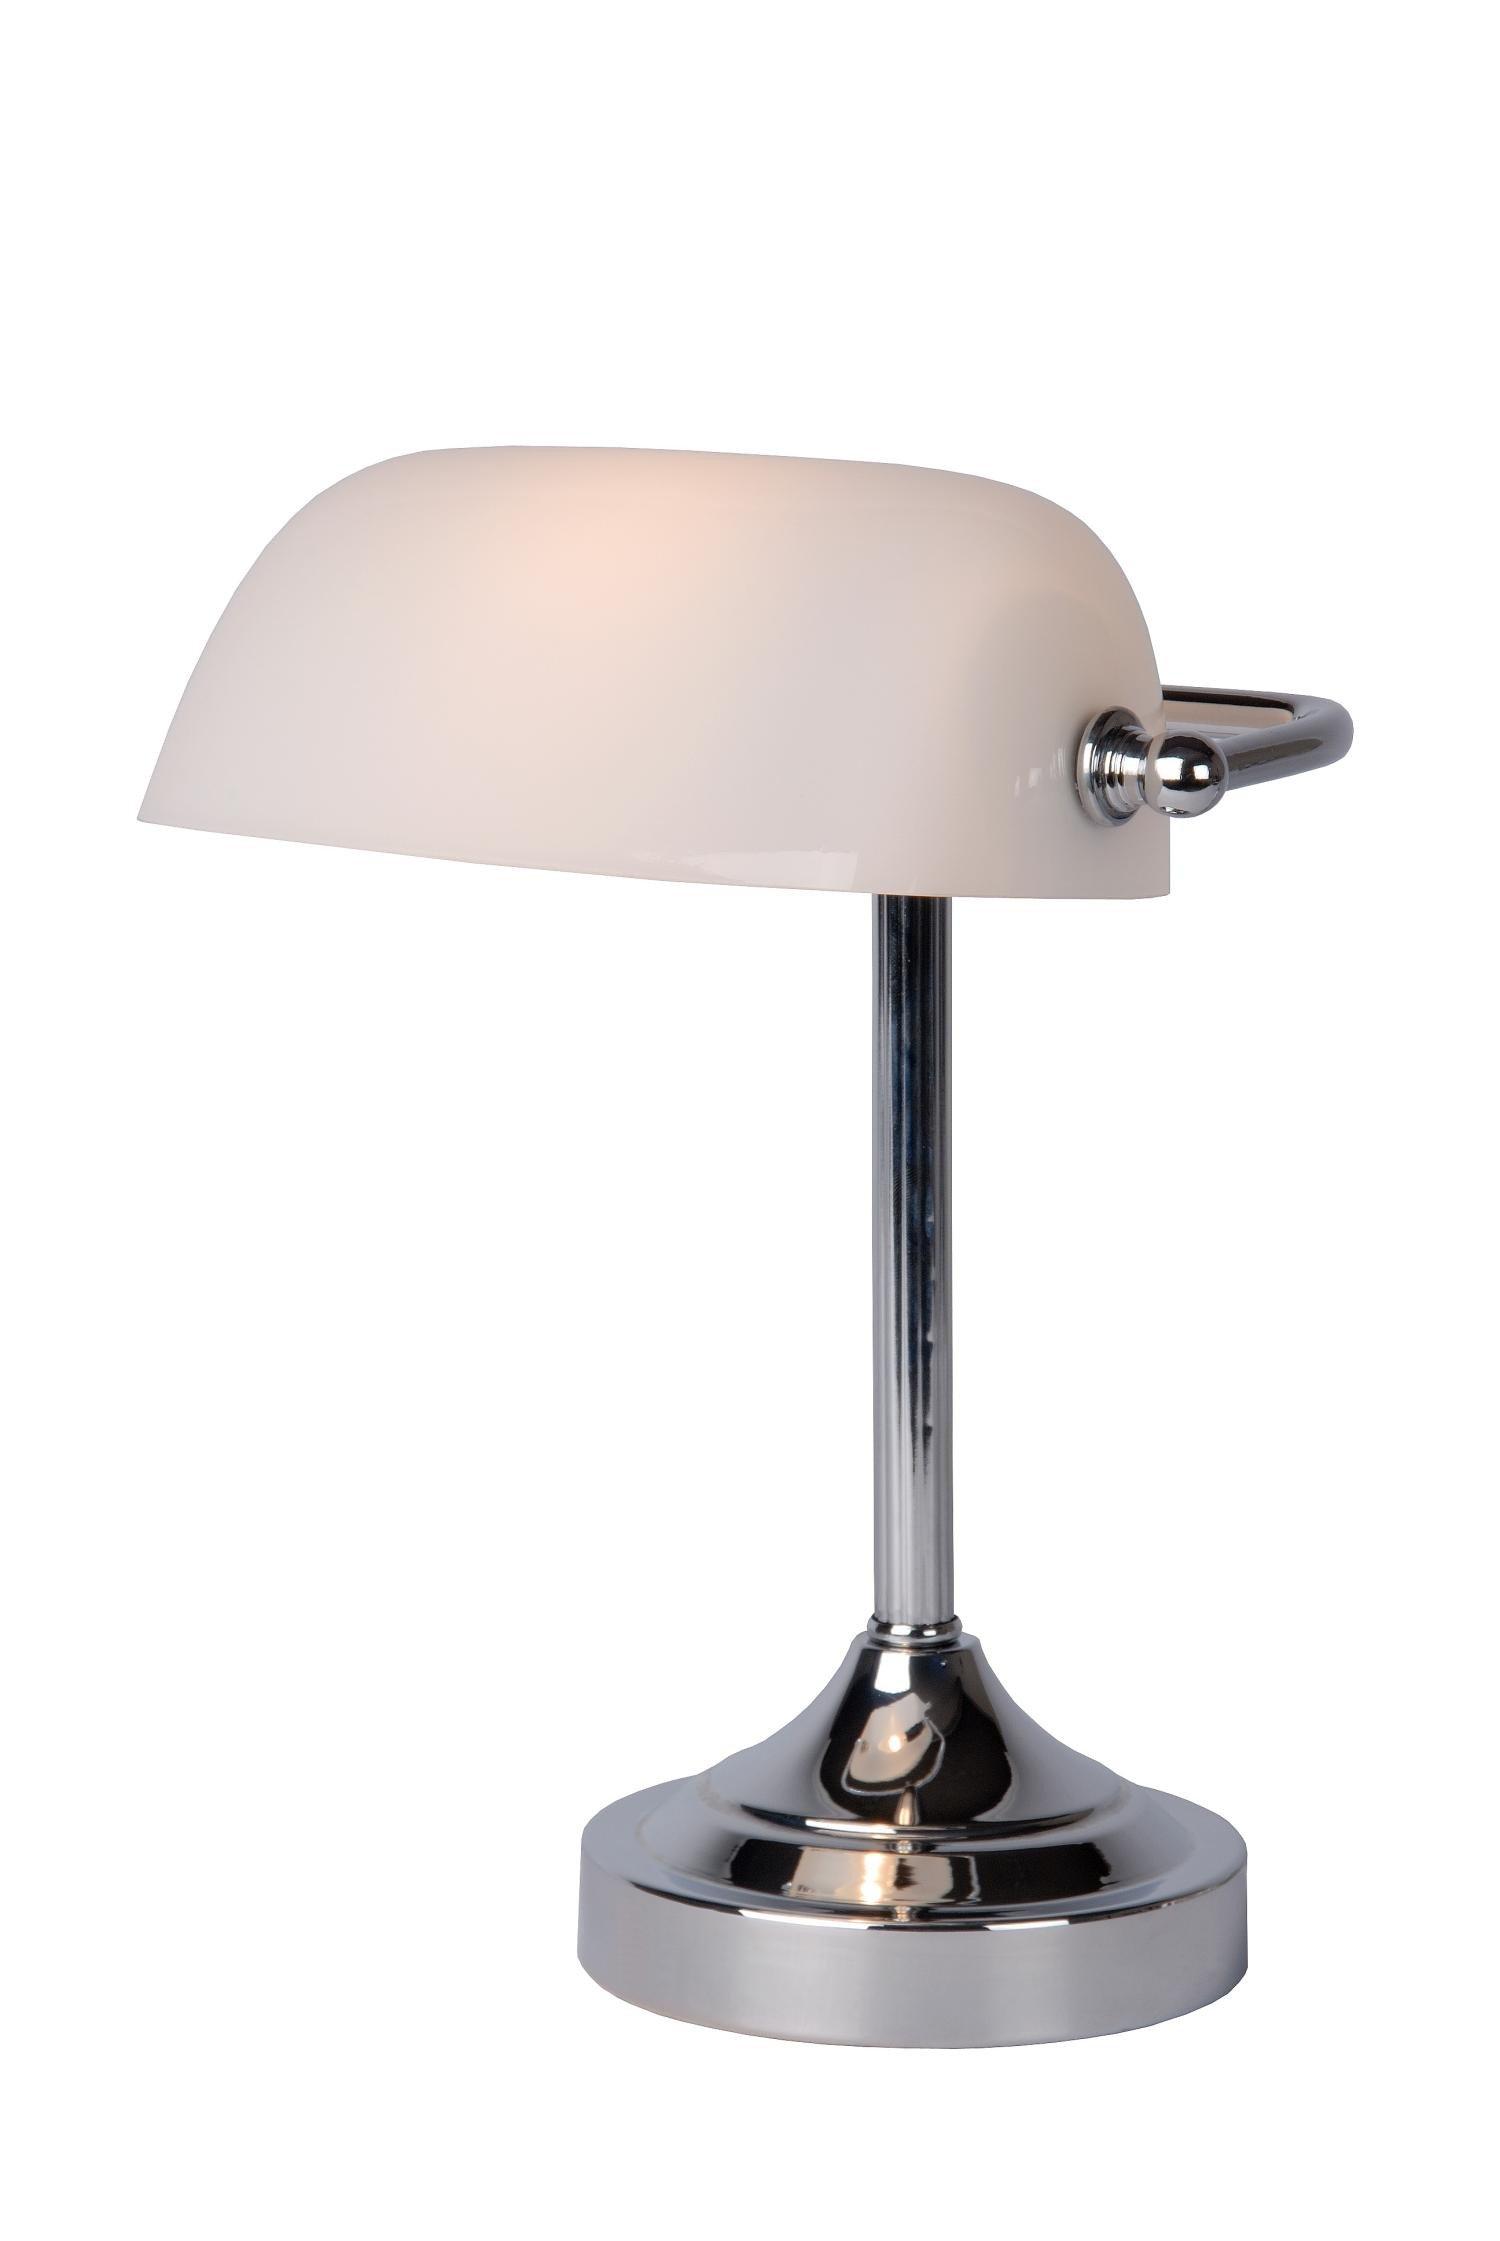 Lucide BANKER Desk Lamp in Metal E14 Vertical Tiltable Classic Table Lighting